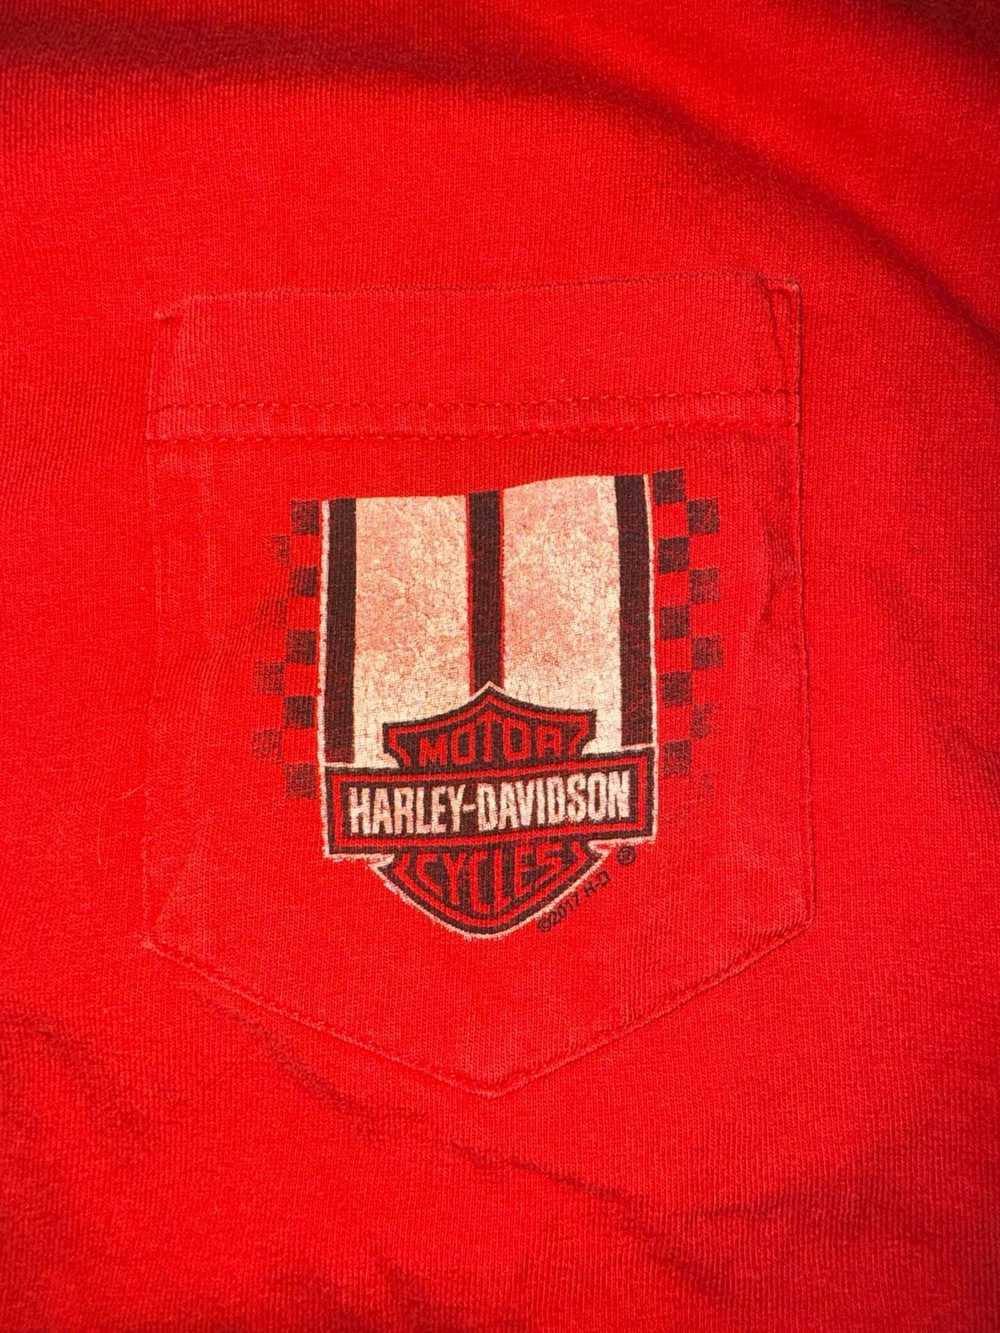 Harley Davidson × Vintage Harley - Davidson Tshirt - image 3